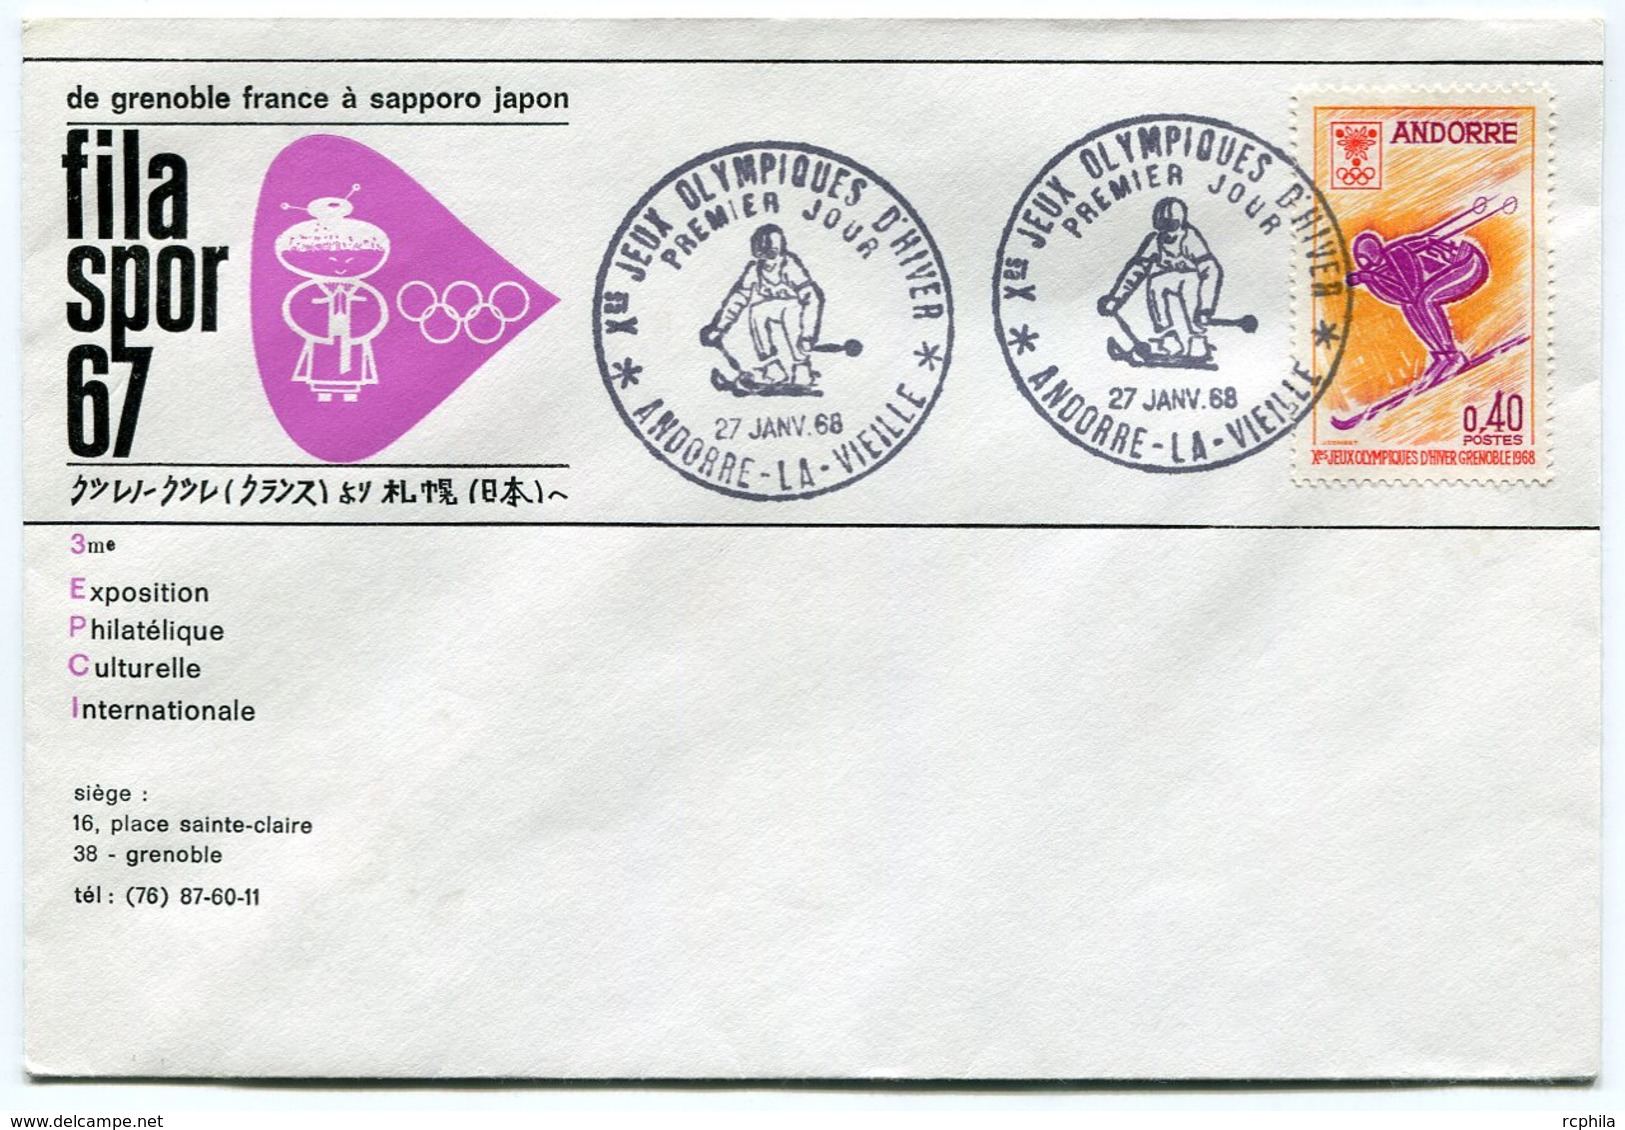 RC 10478 ANDORRE JEUX OLYMPIQUES DE GRENOBLE 1968 SKI ENVELOPPE FRANCE JAPON 1er JOUR FDC TB - Briefe U. Dokumente